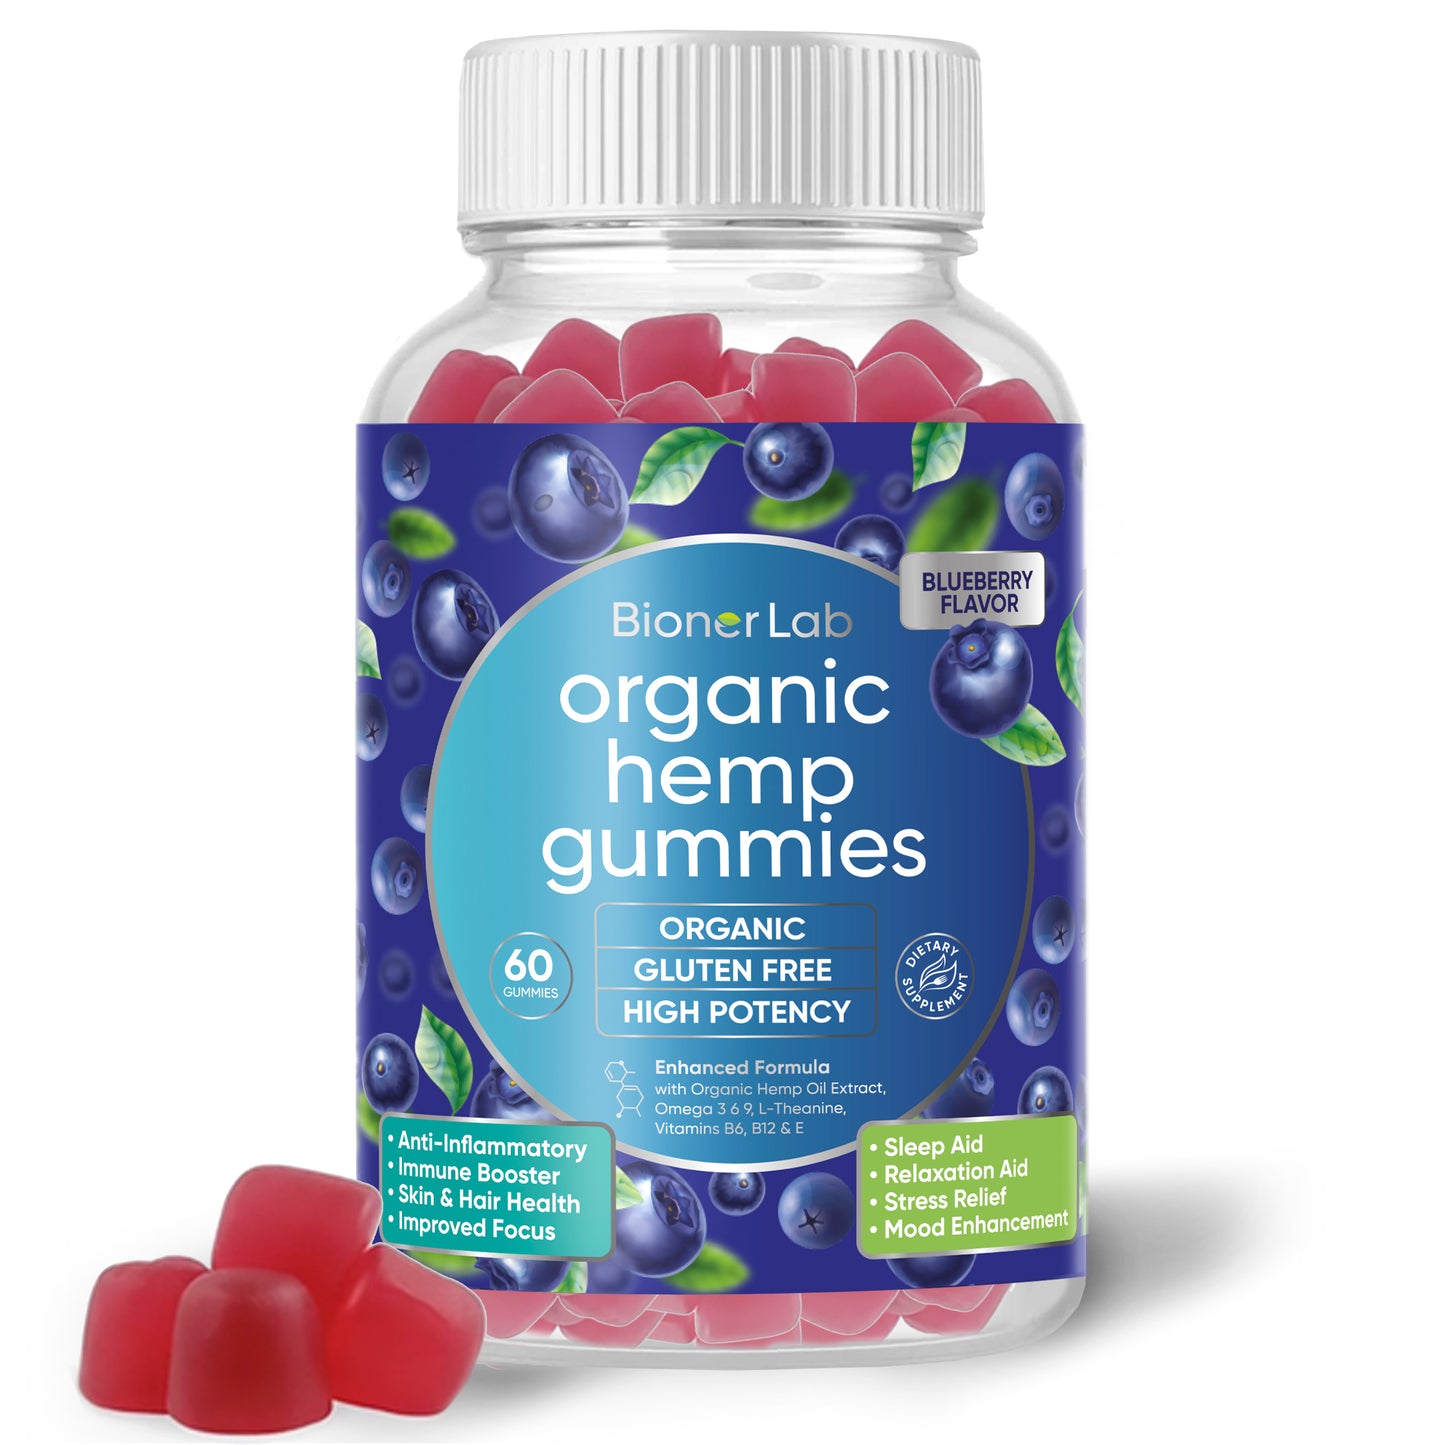 BionerLab Organic Hemp Gummies